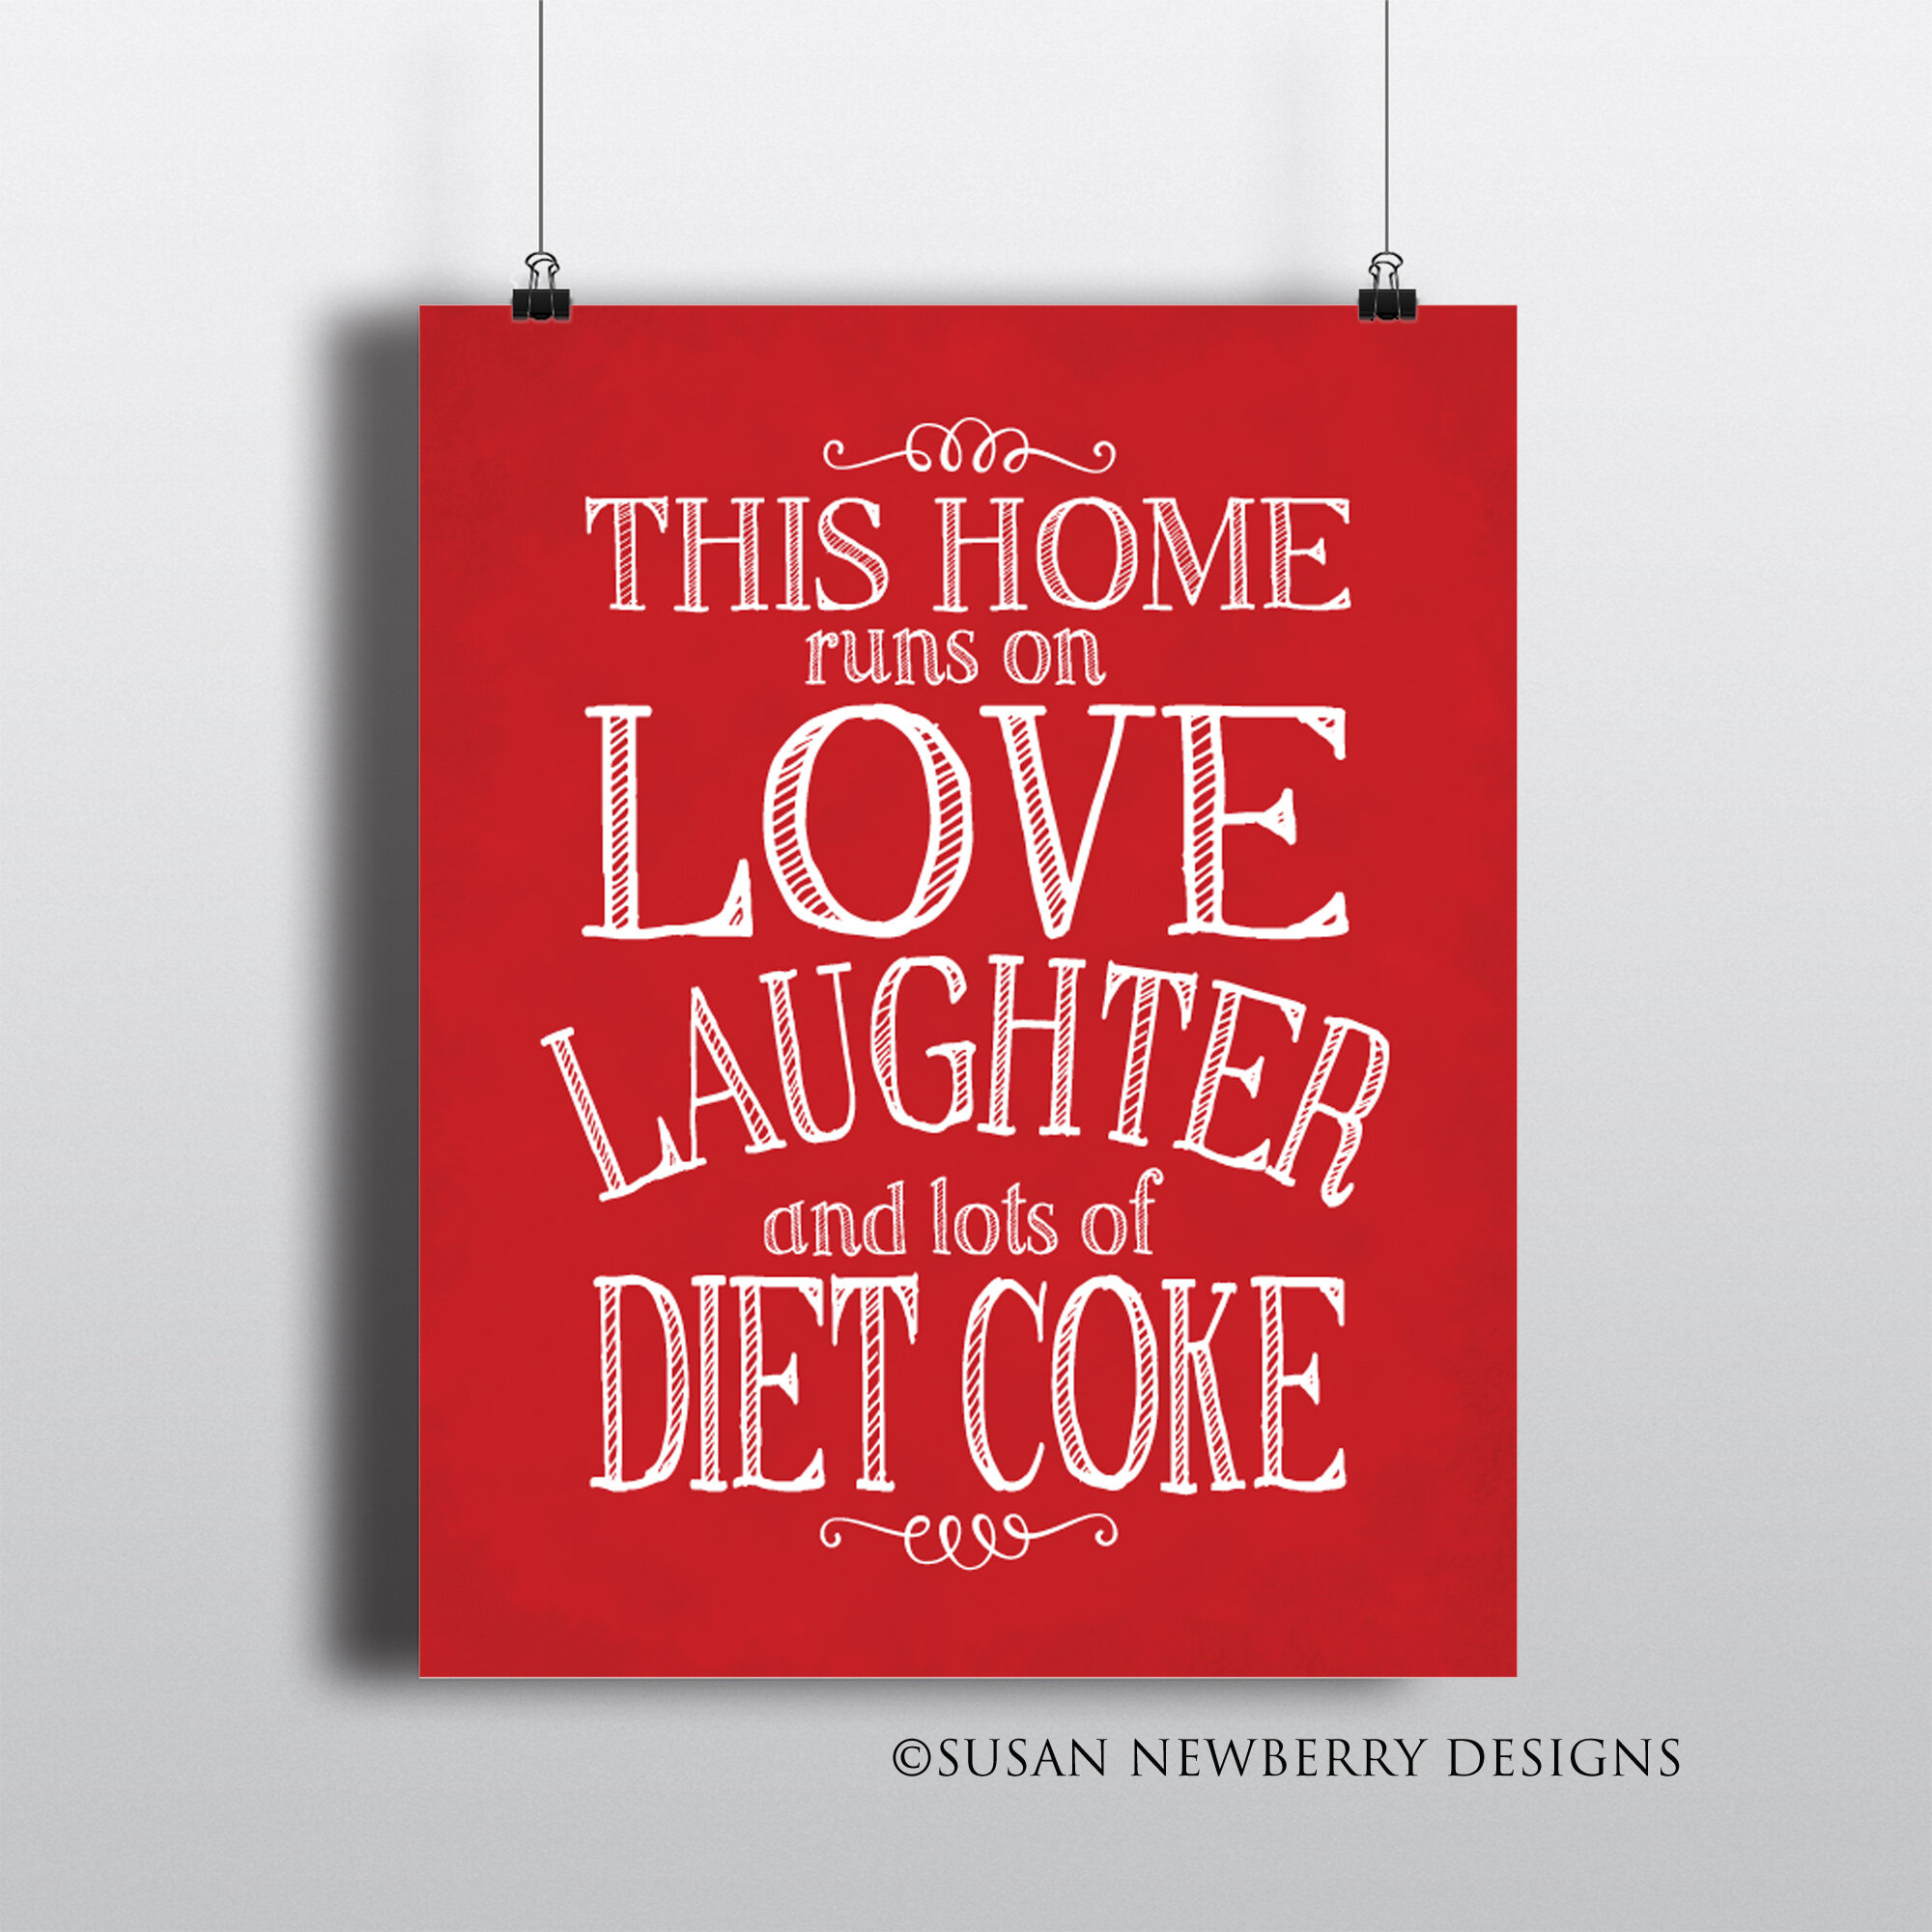 Diet-Coke print 2.jpg